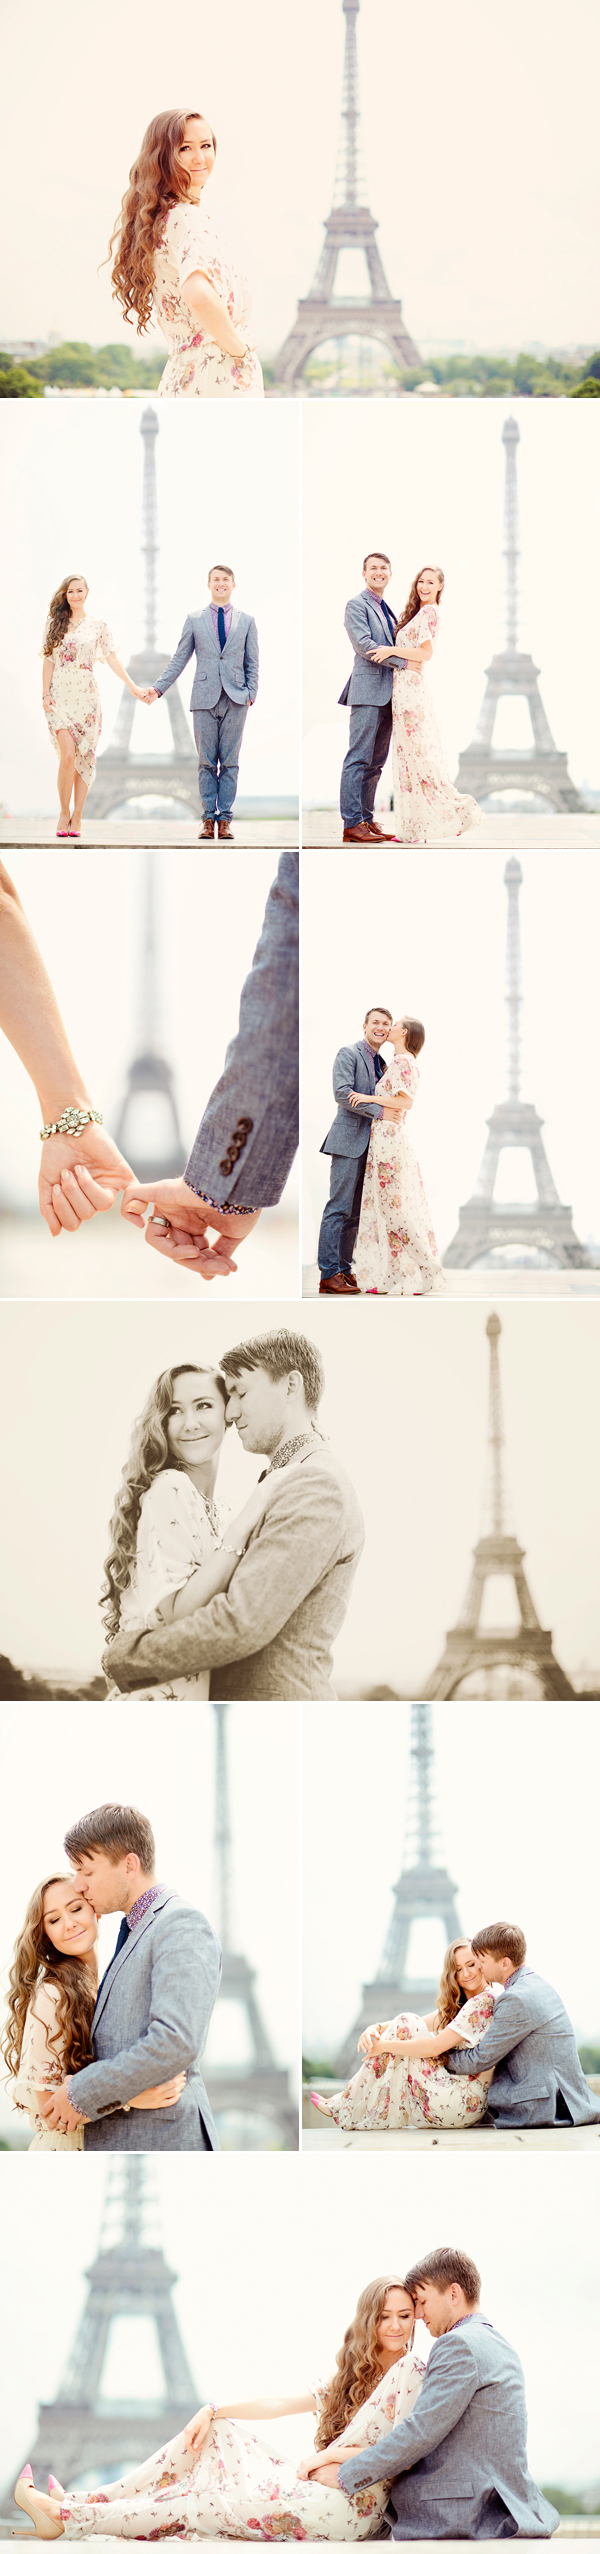 paris-honeymoon01